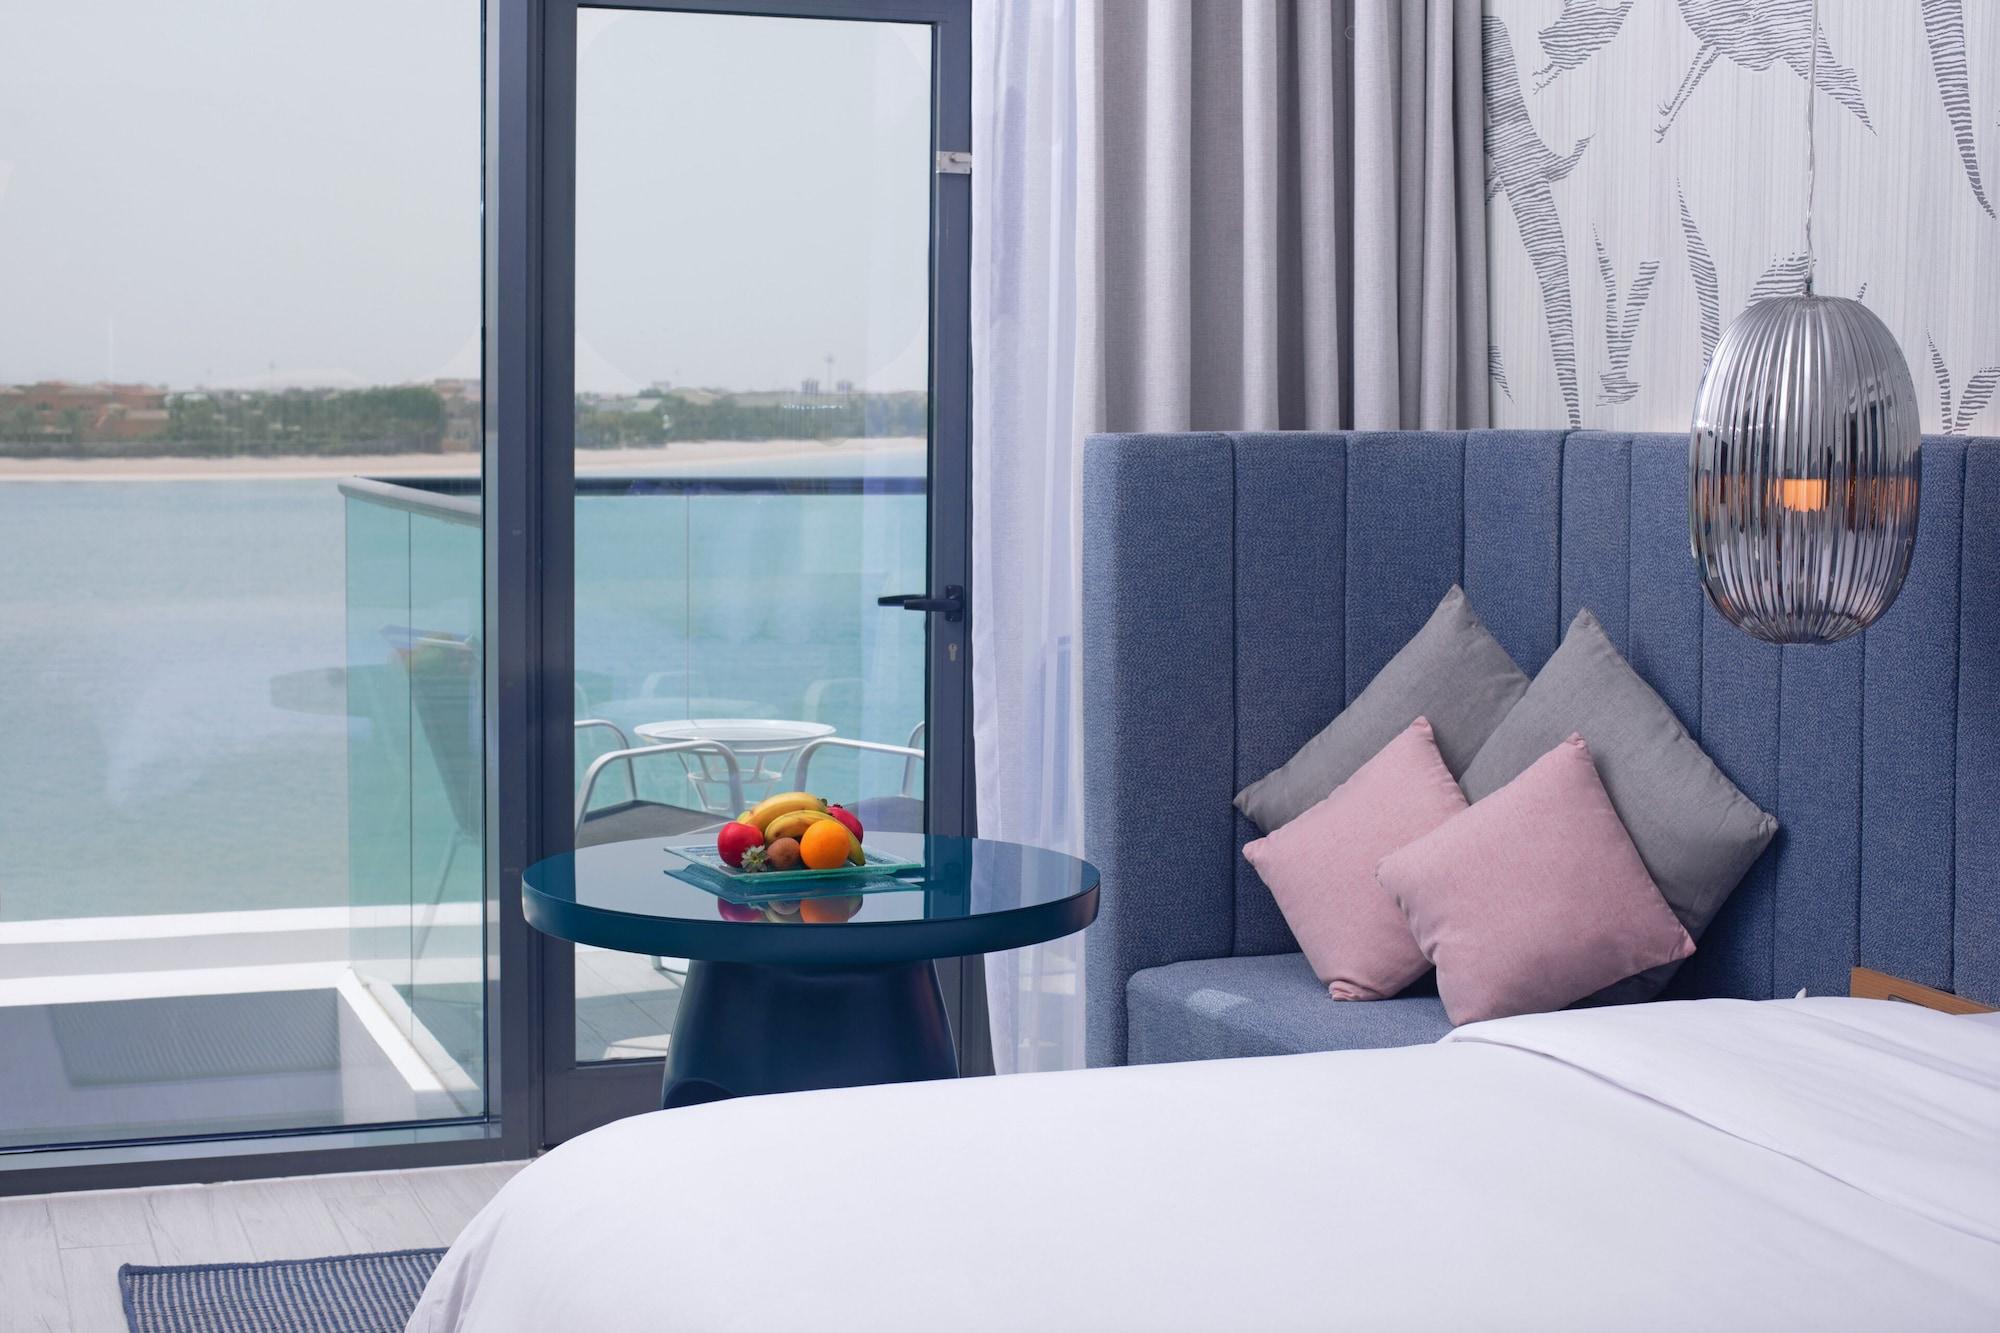 C Central Hotel And Resort The Palm Dubai Exterior photo